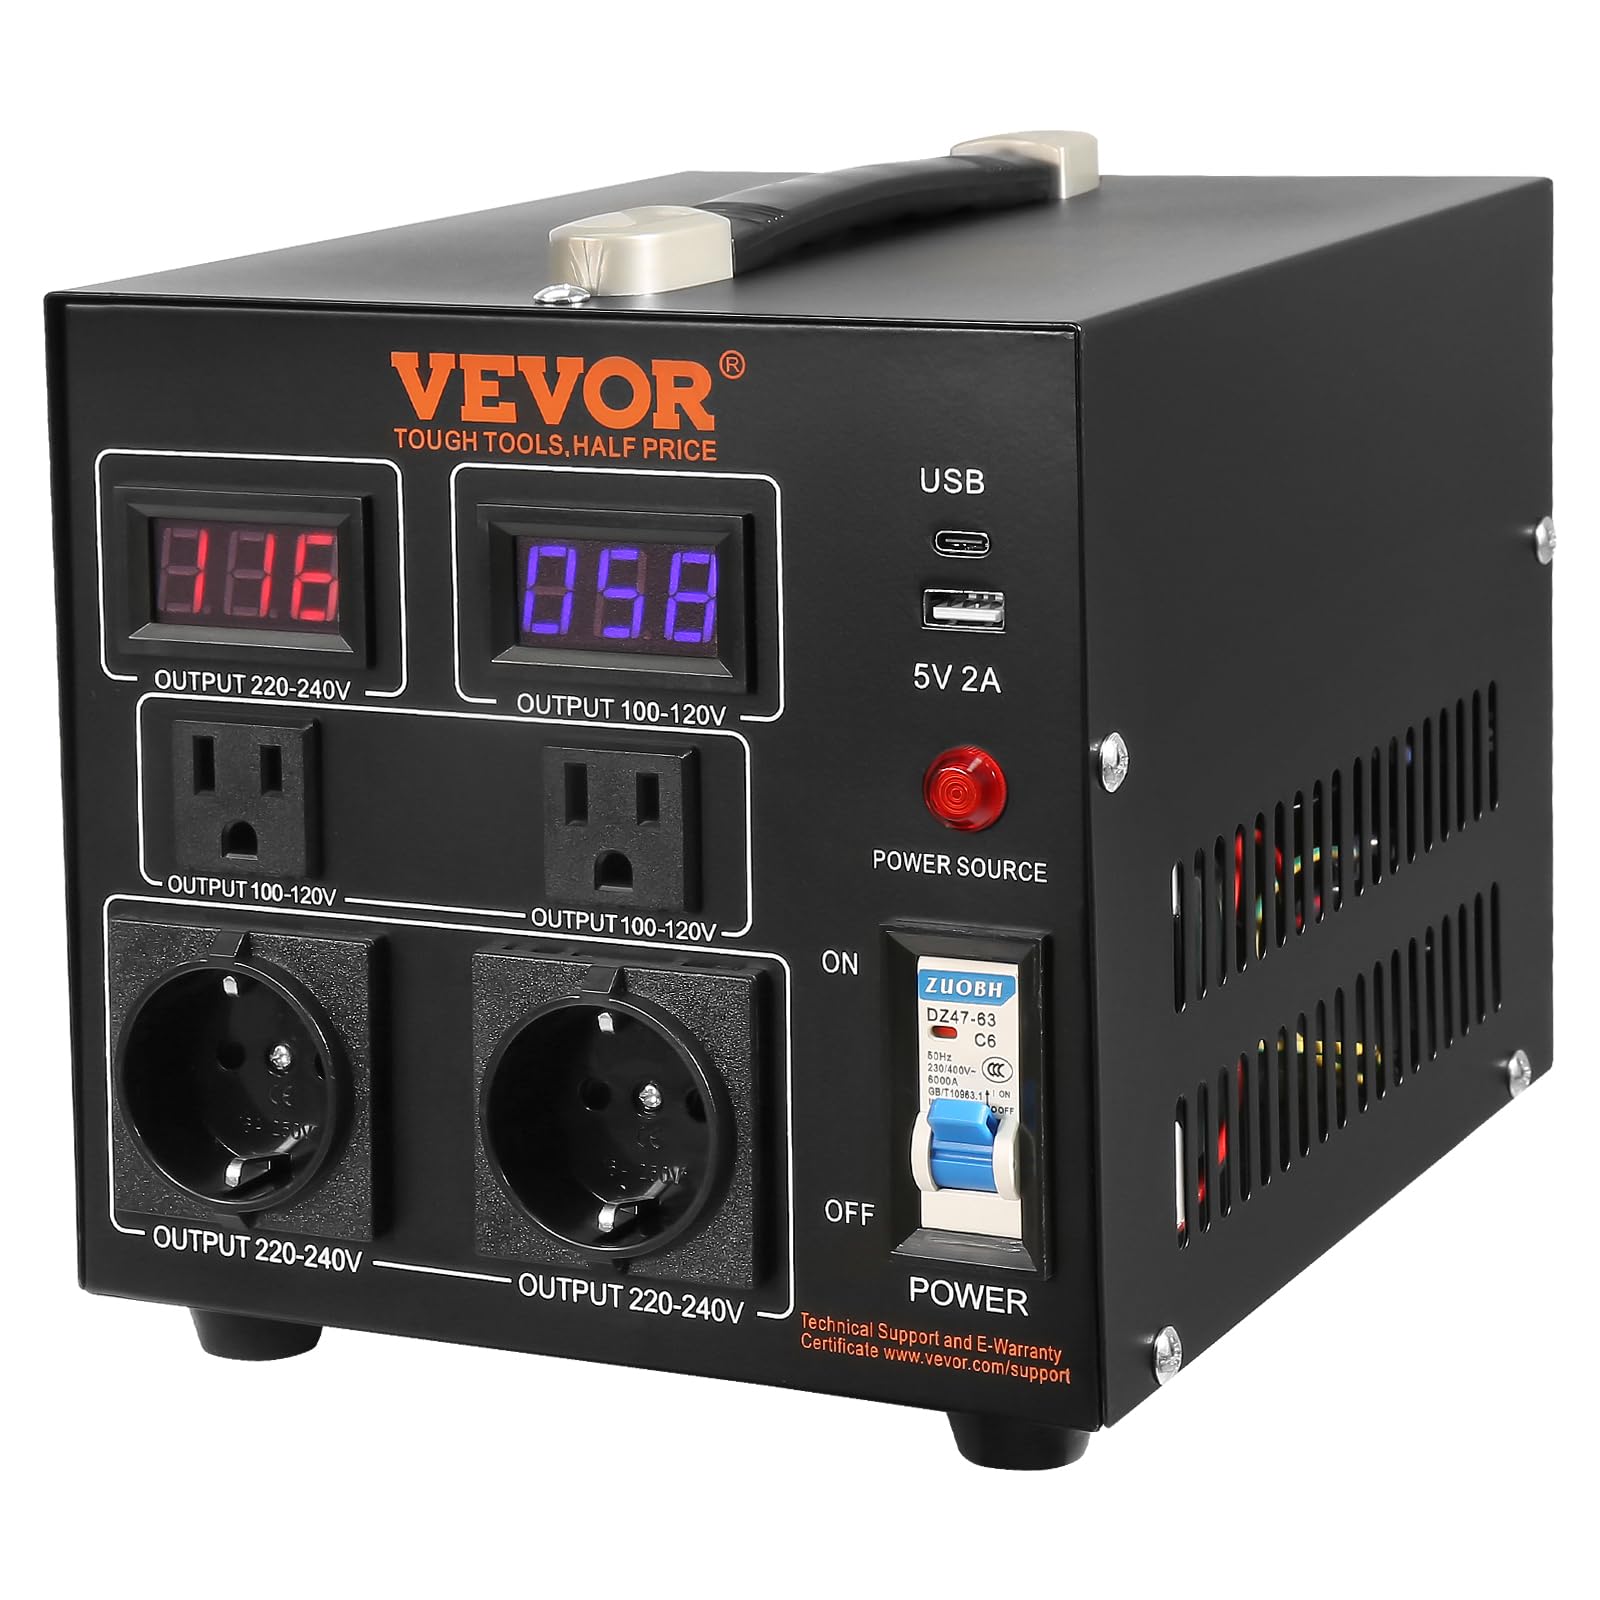 VEVOR Voltage Converter Transformer, 500W, Heavy Duty Step Up/Down Transformer, Convert from 110 Volt to 220 Volt and from 220 Volt to 110 Volt, with US Outlet EU Outlet 5V USB Port, CE Certified